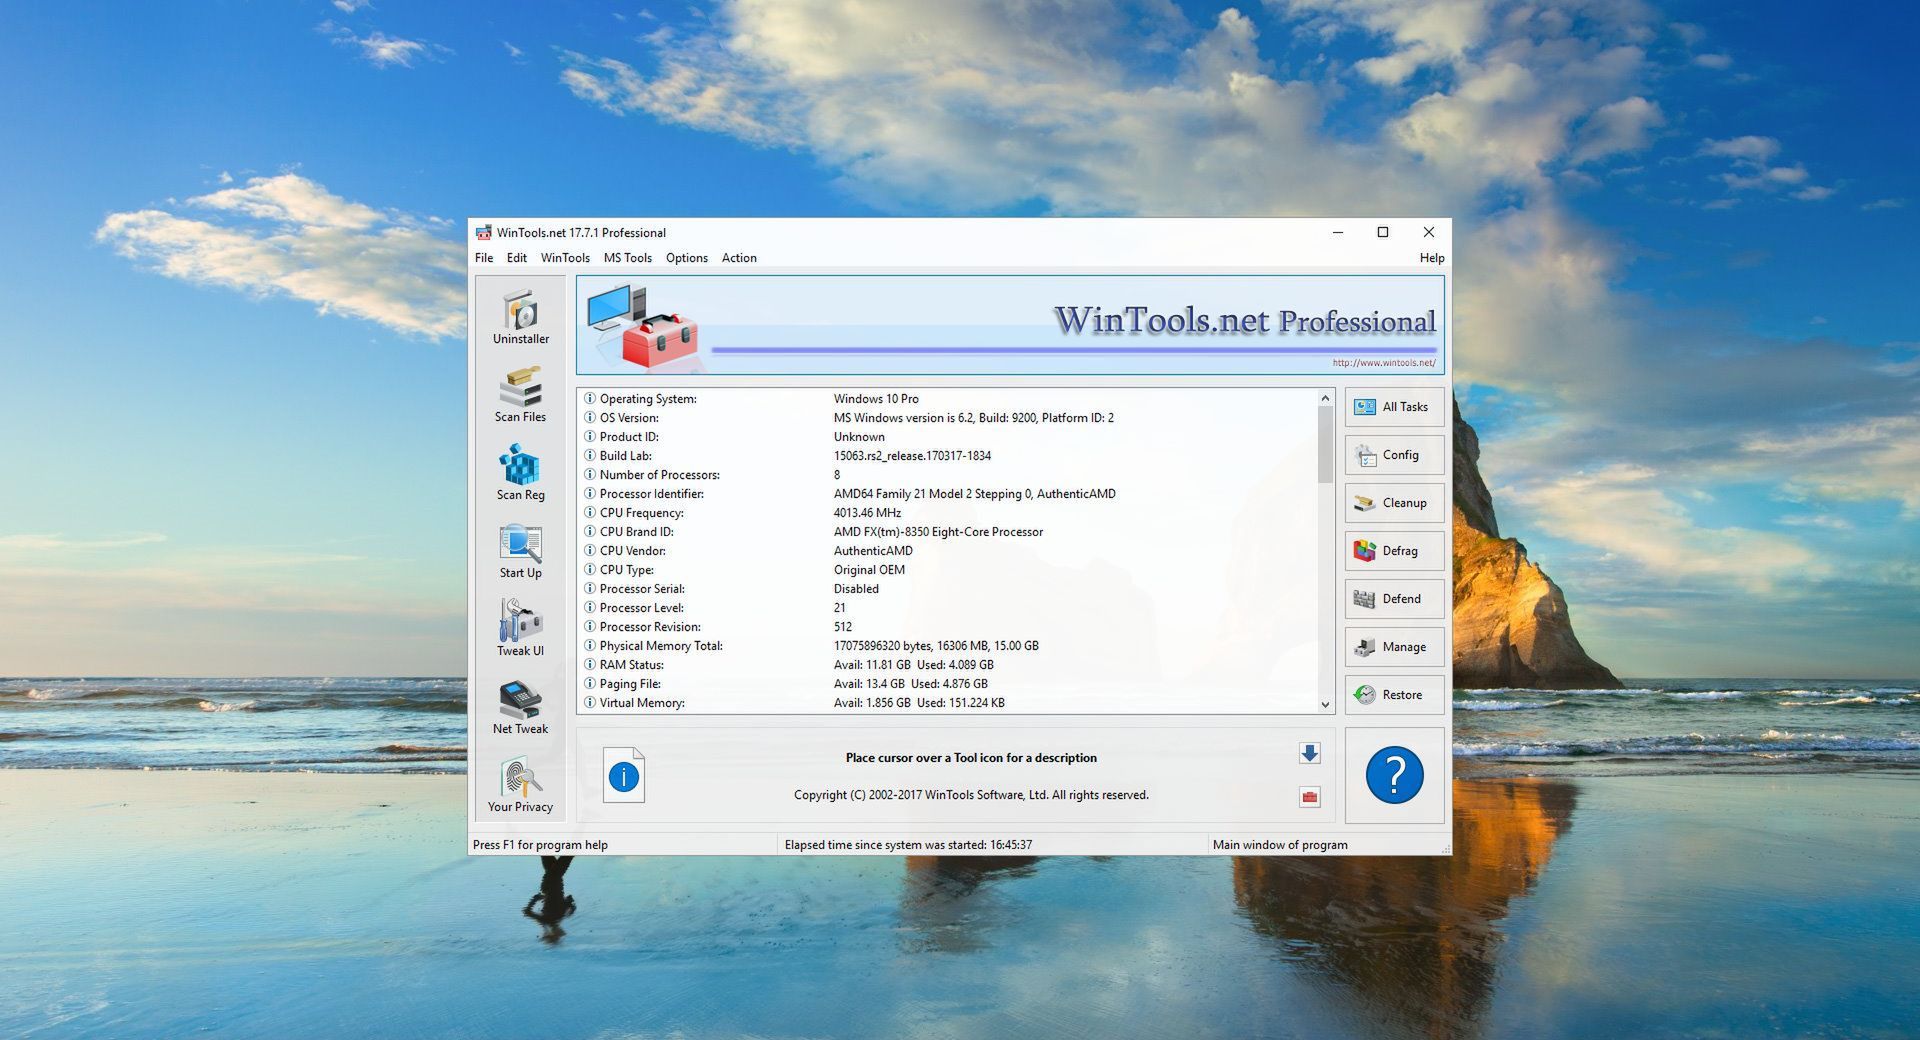 WinTools net Premium 23.8.1 instal the last version for ios